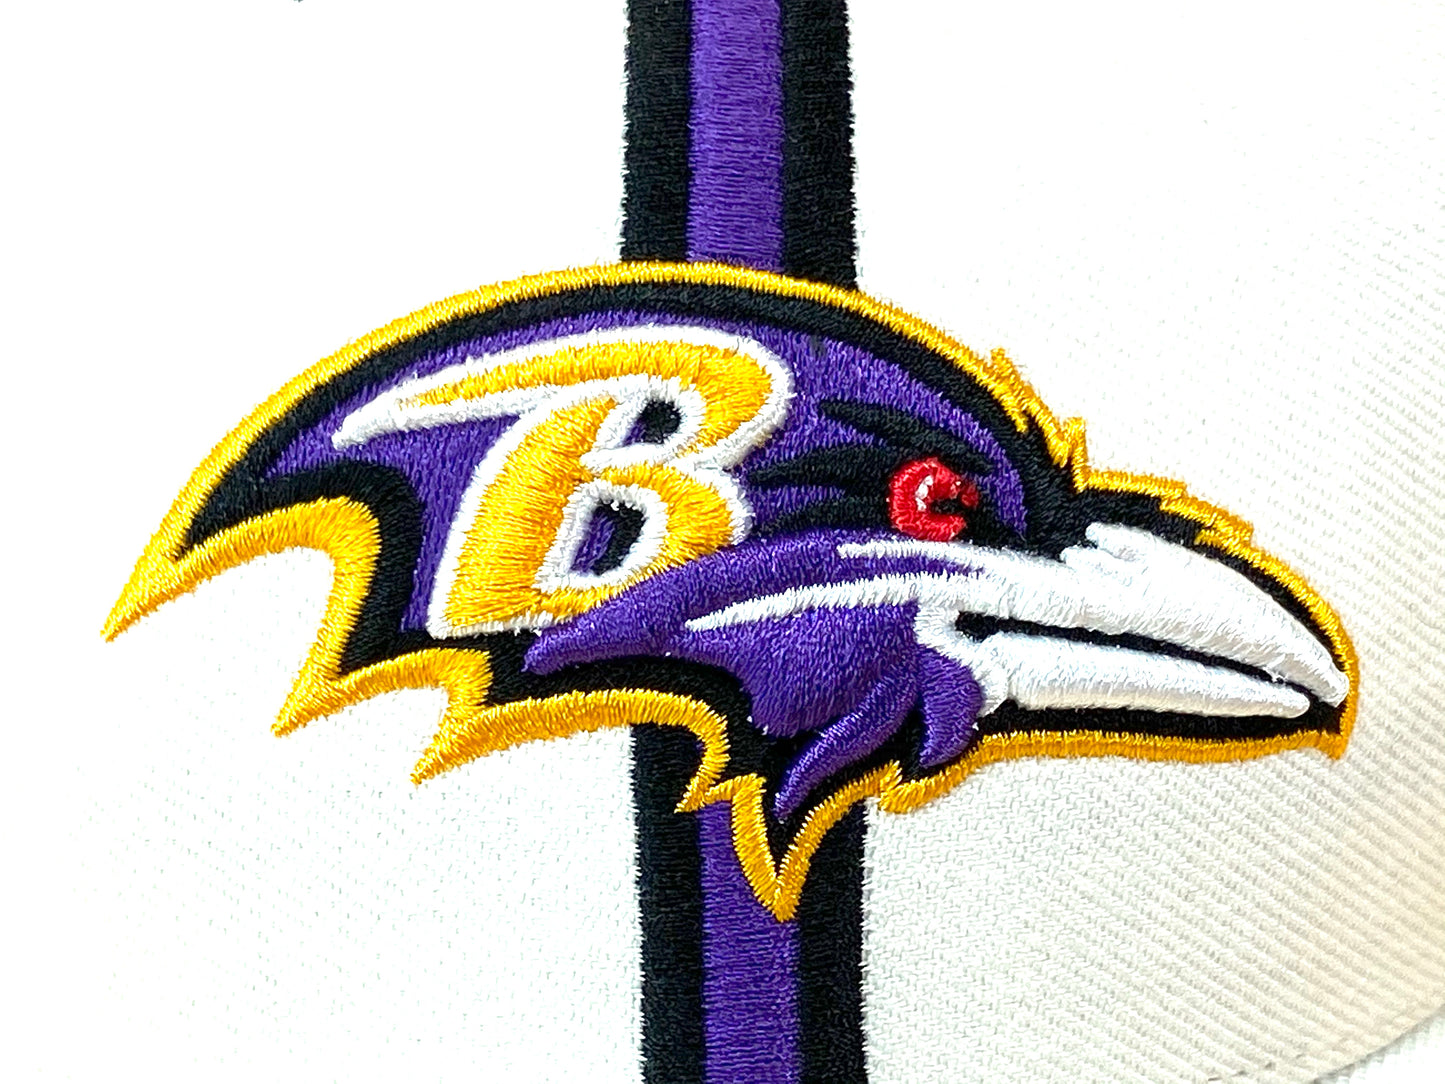 Baltimore Ravens Vintage NFL 15% Wool Logo Cap by Twins Enterprise